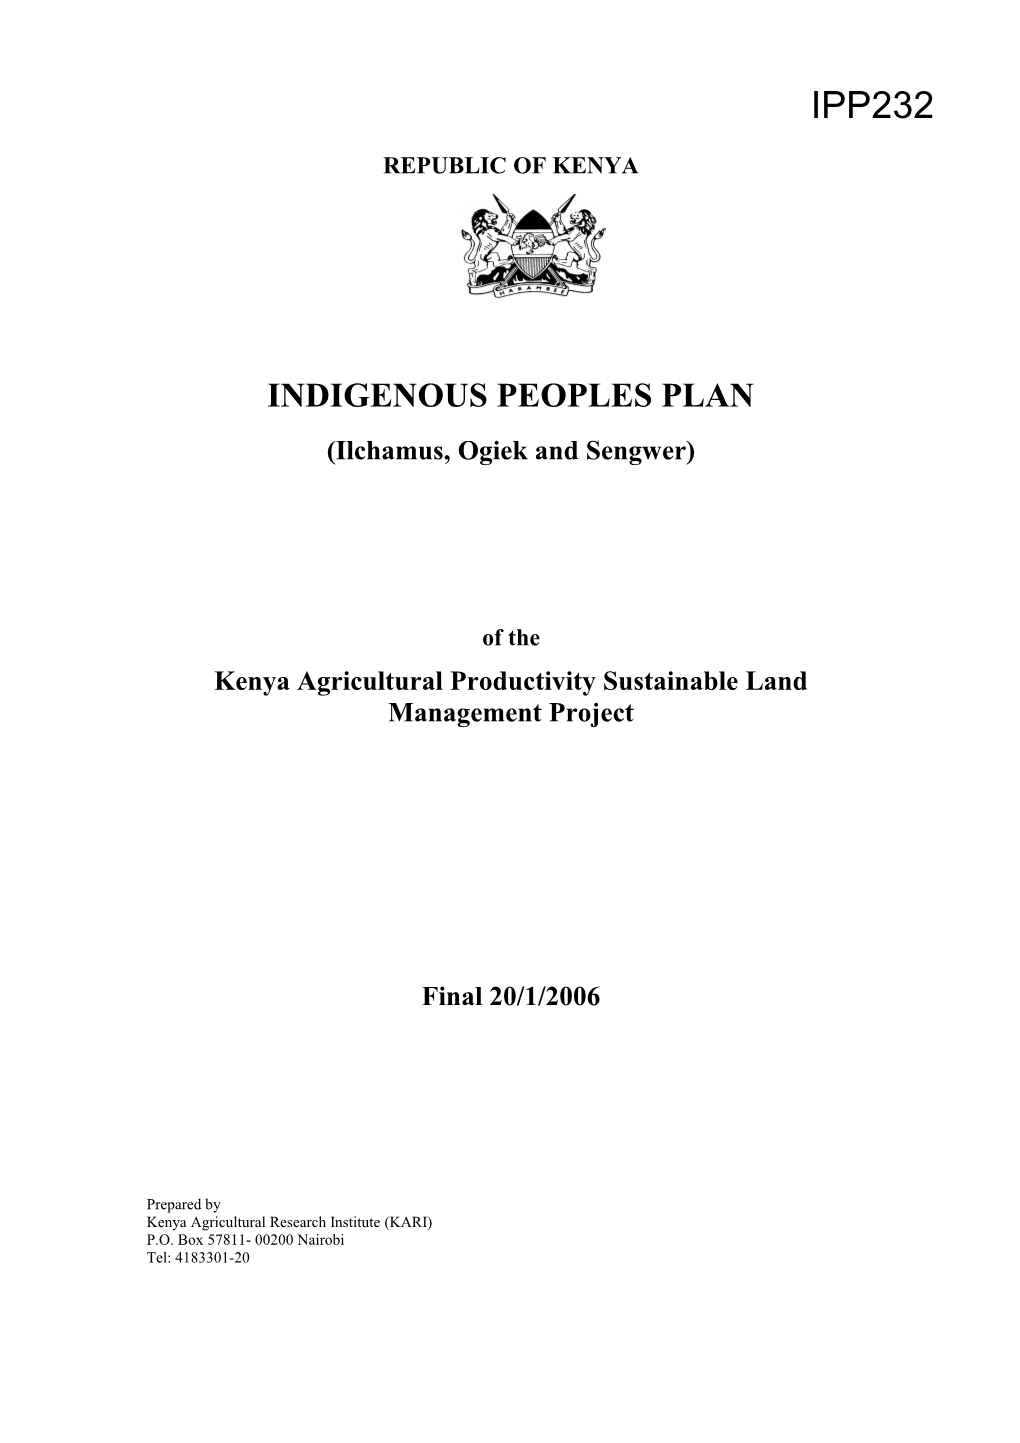 KARI: Indigenous Peoples Plan for the KAP-SLM Project in Kenya